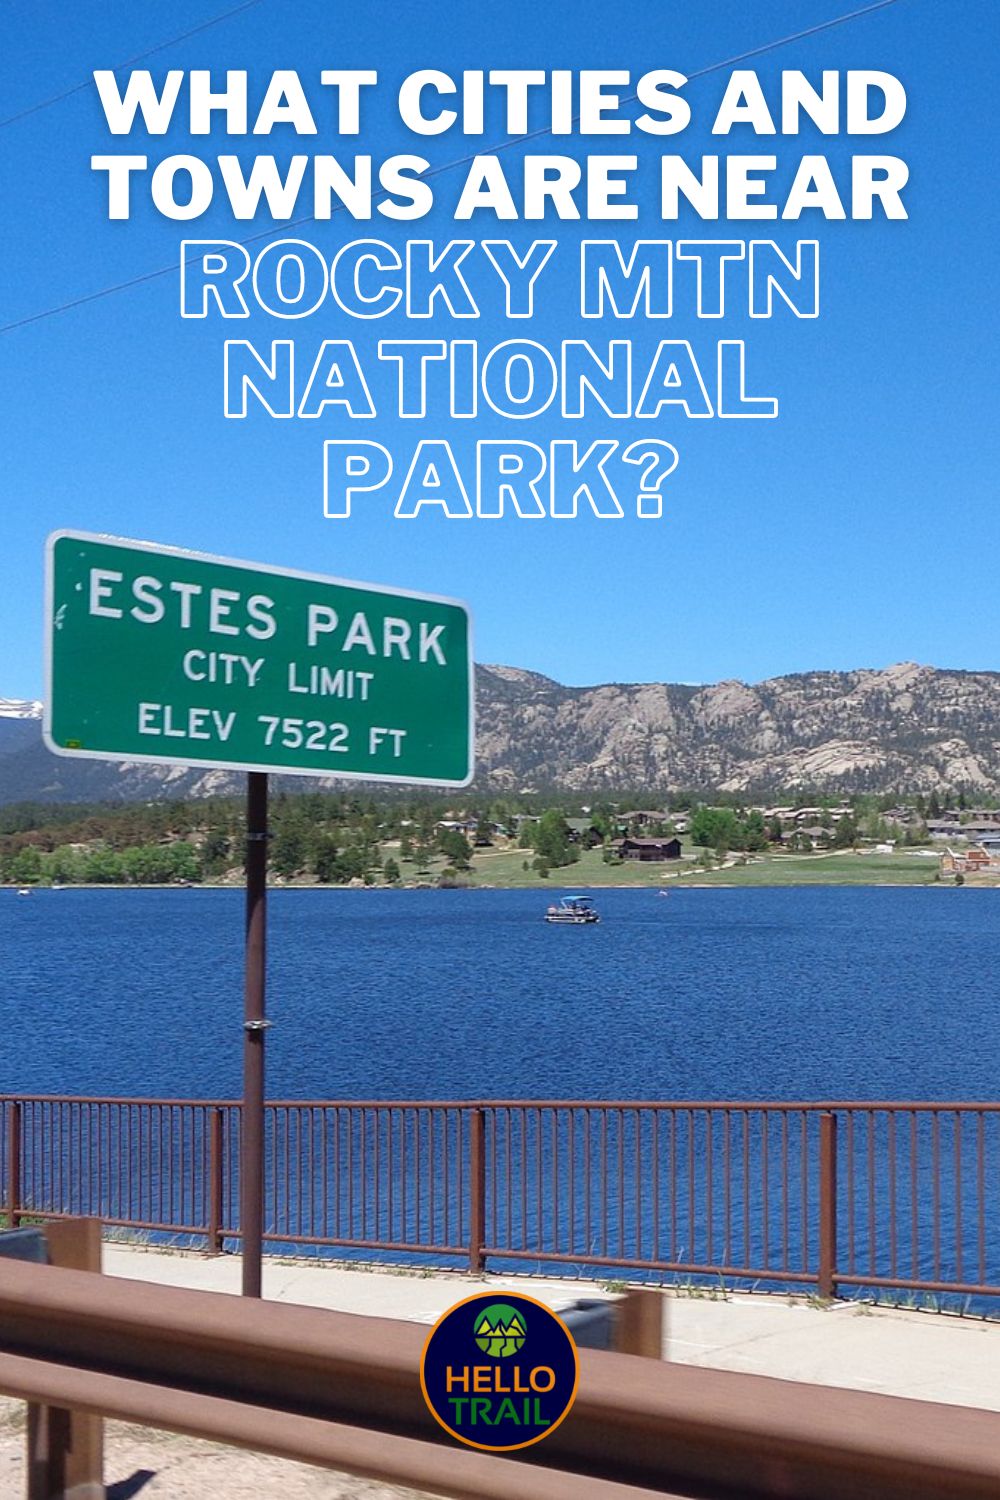 Estes Park's City Limit has an elevation of 7,522 feet